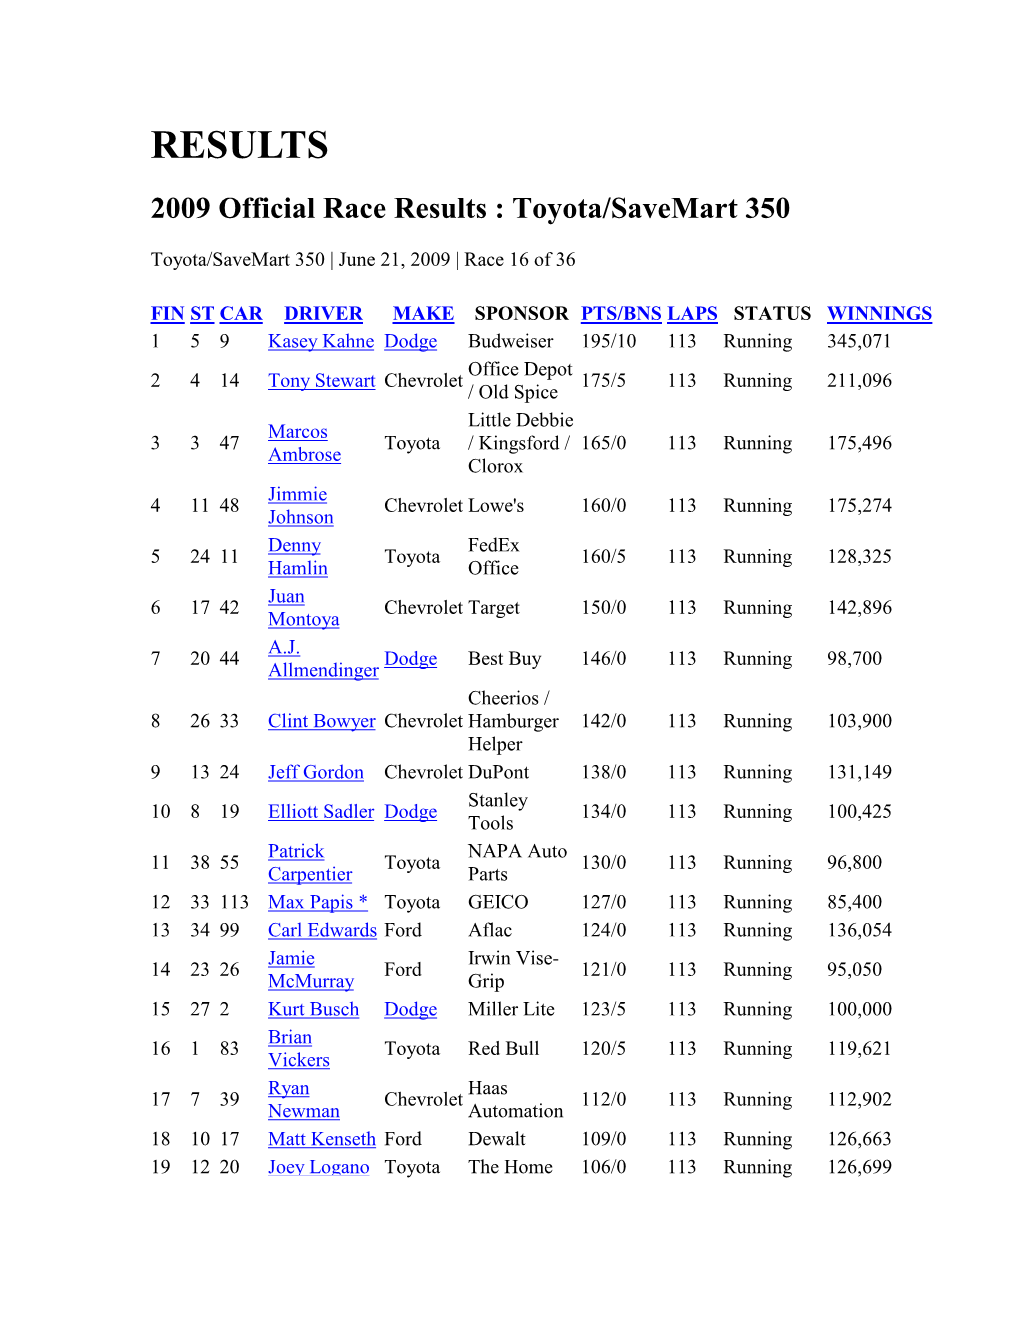 Toyota/Save Mart 350 Infineon Raceway 2009 Race Results